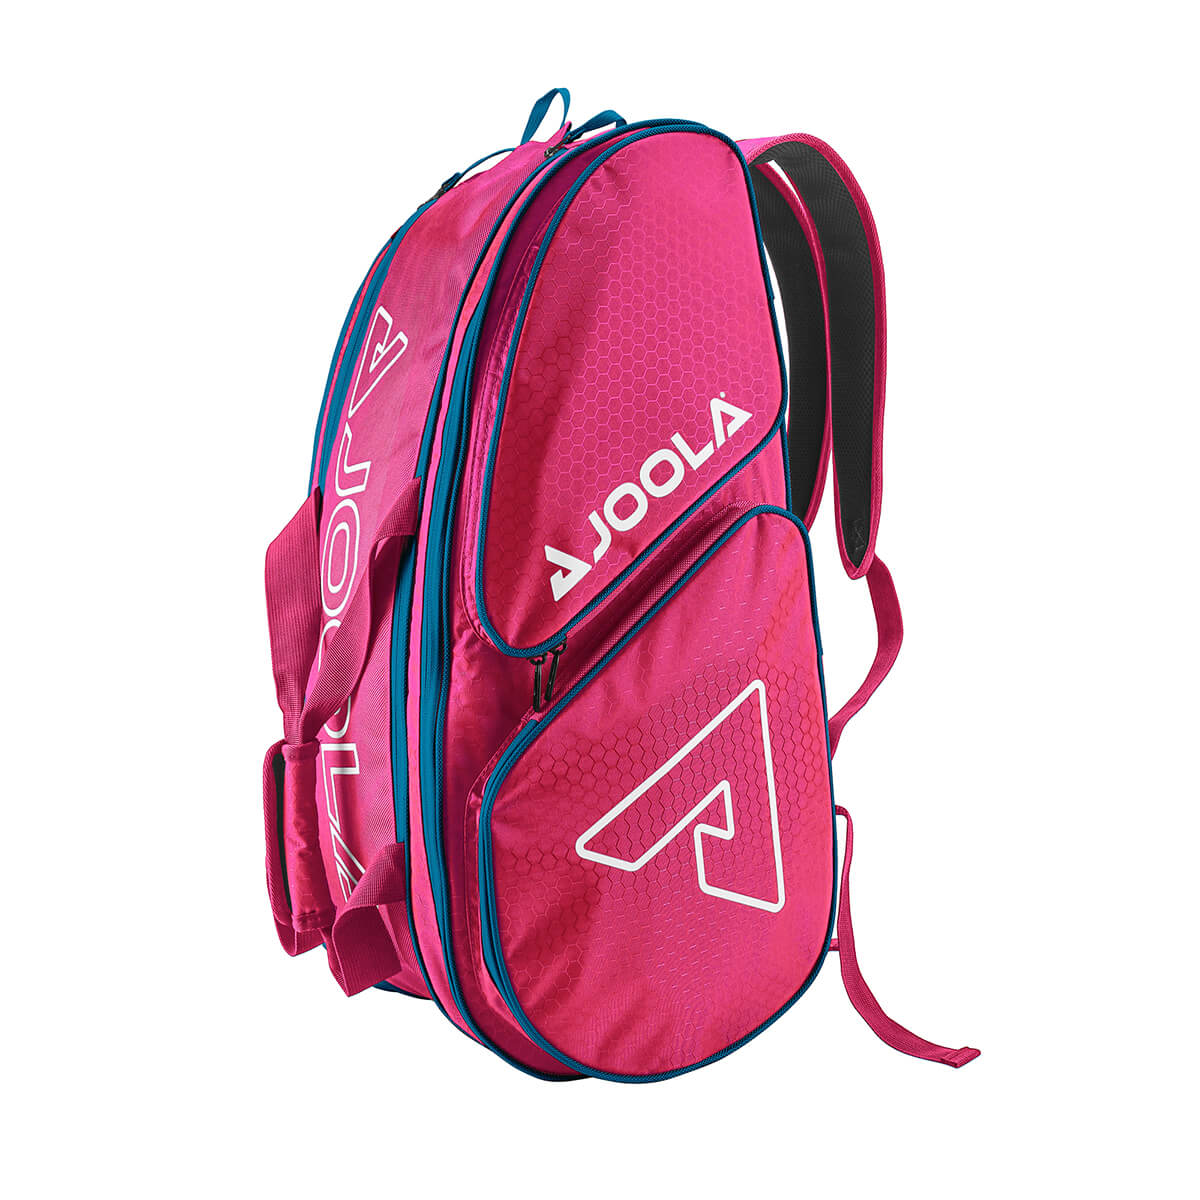 A pink and blue JOOLA Tour Elite Pro Bag Pickleball Bag with the word aloha on it.